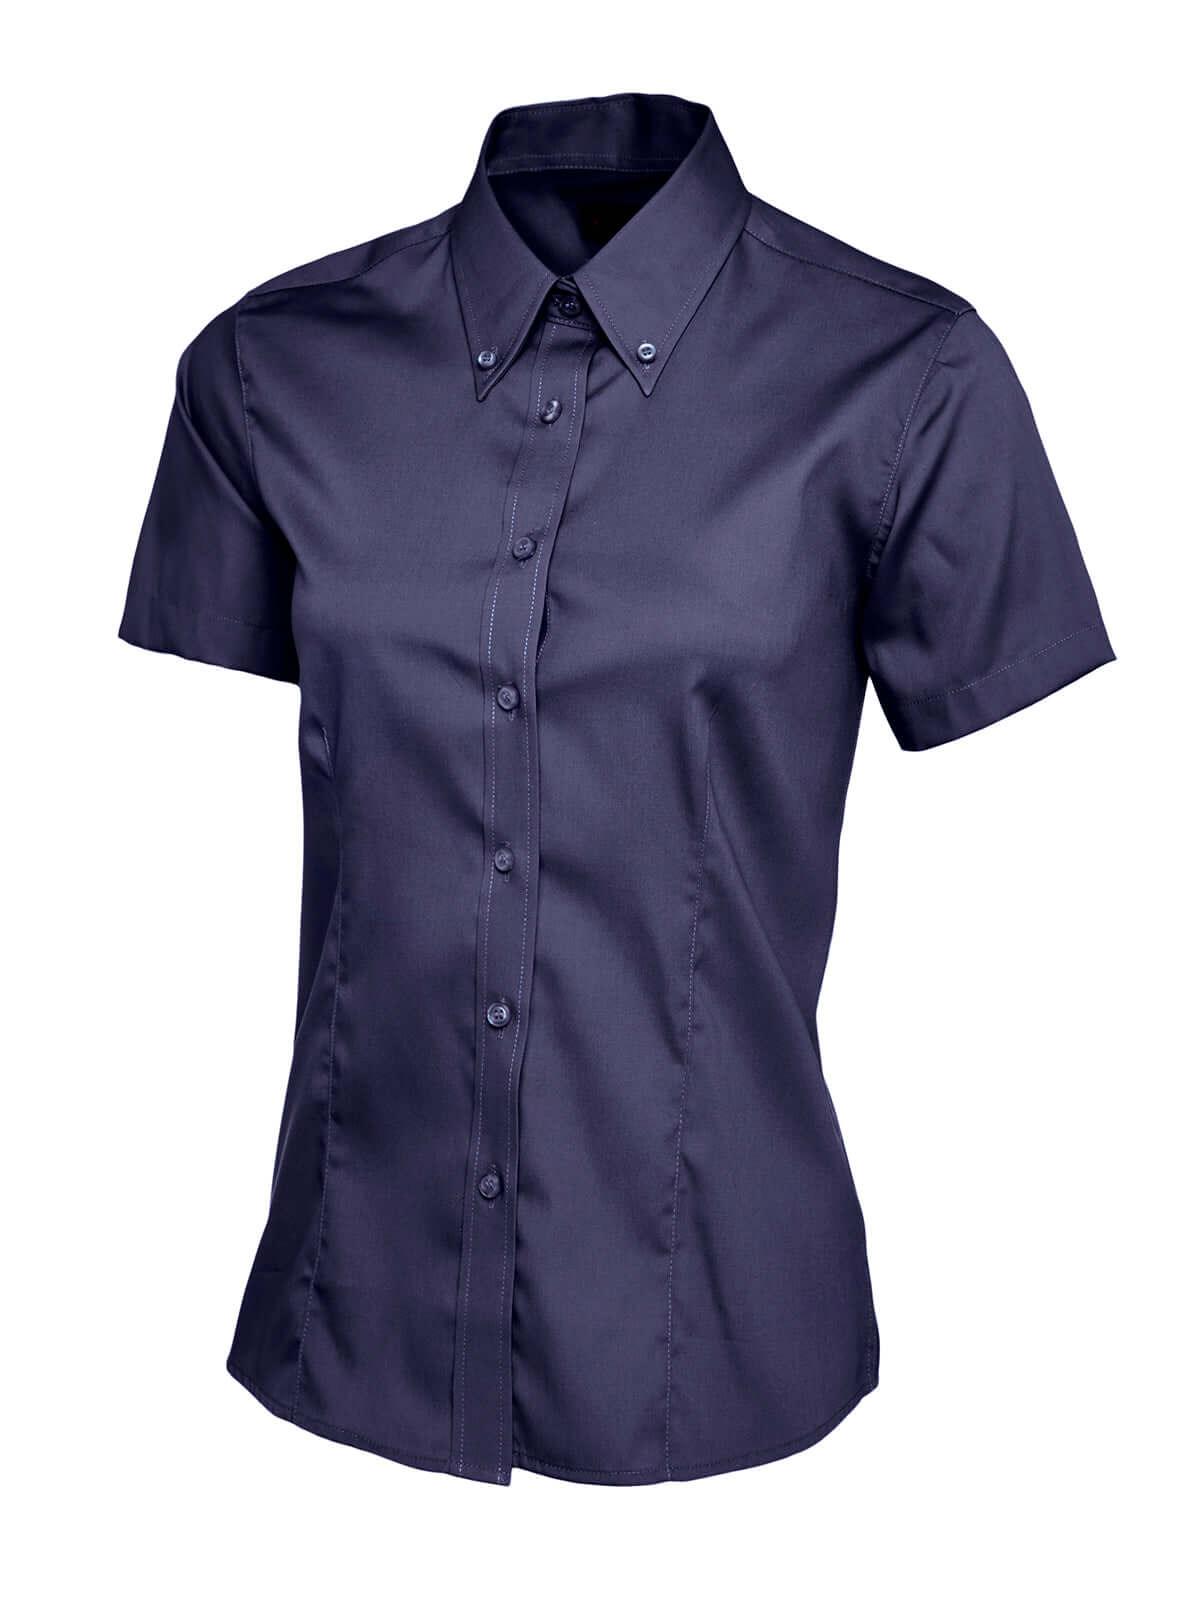 Pegasus Uniform Ladies Pinpoint Oxford Short Sleeve Shirt - Navy Blue